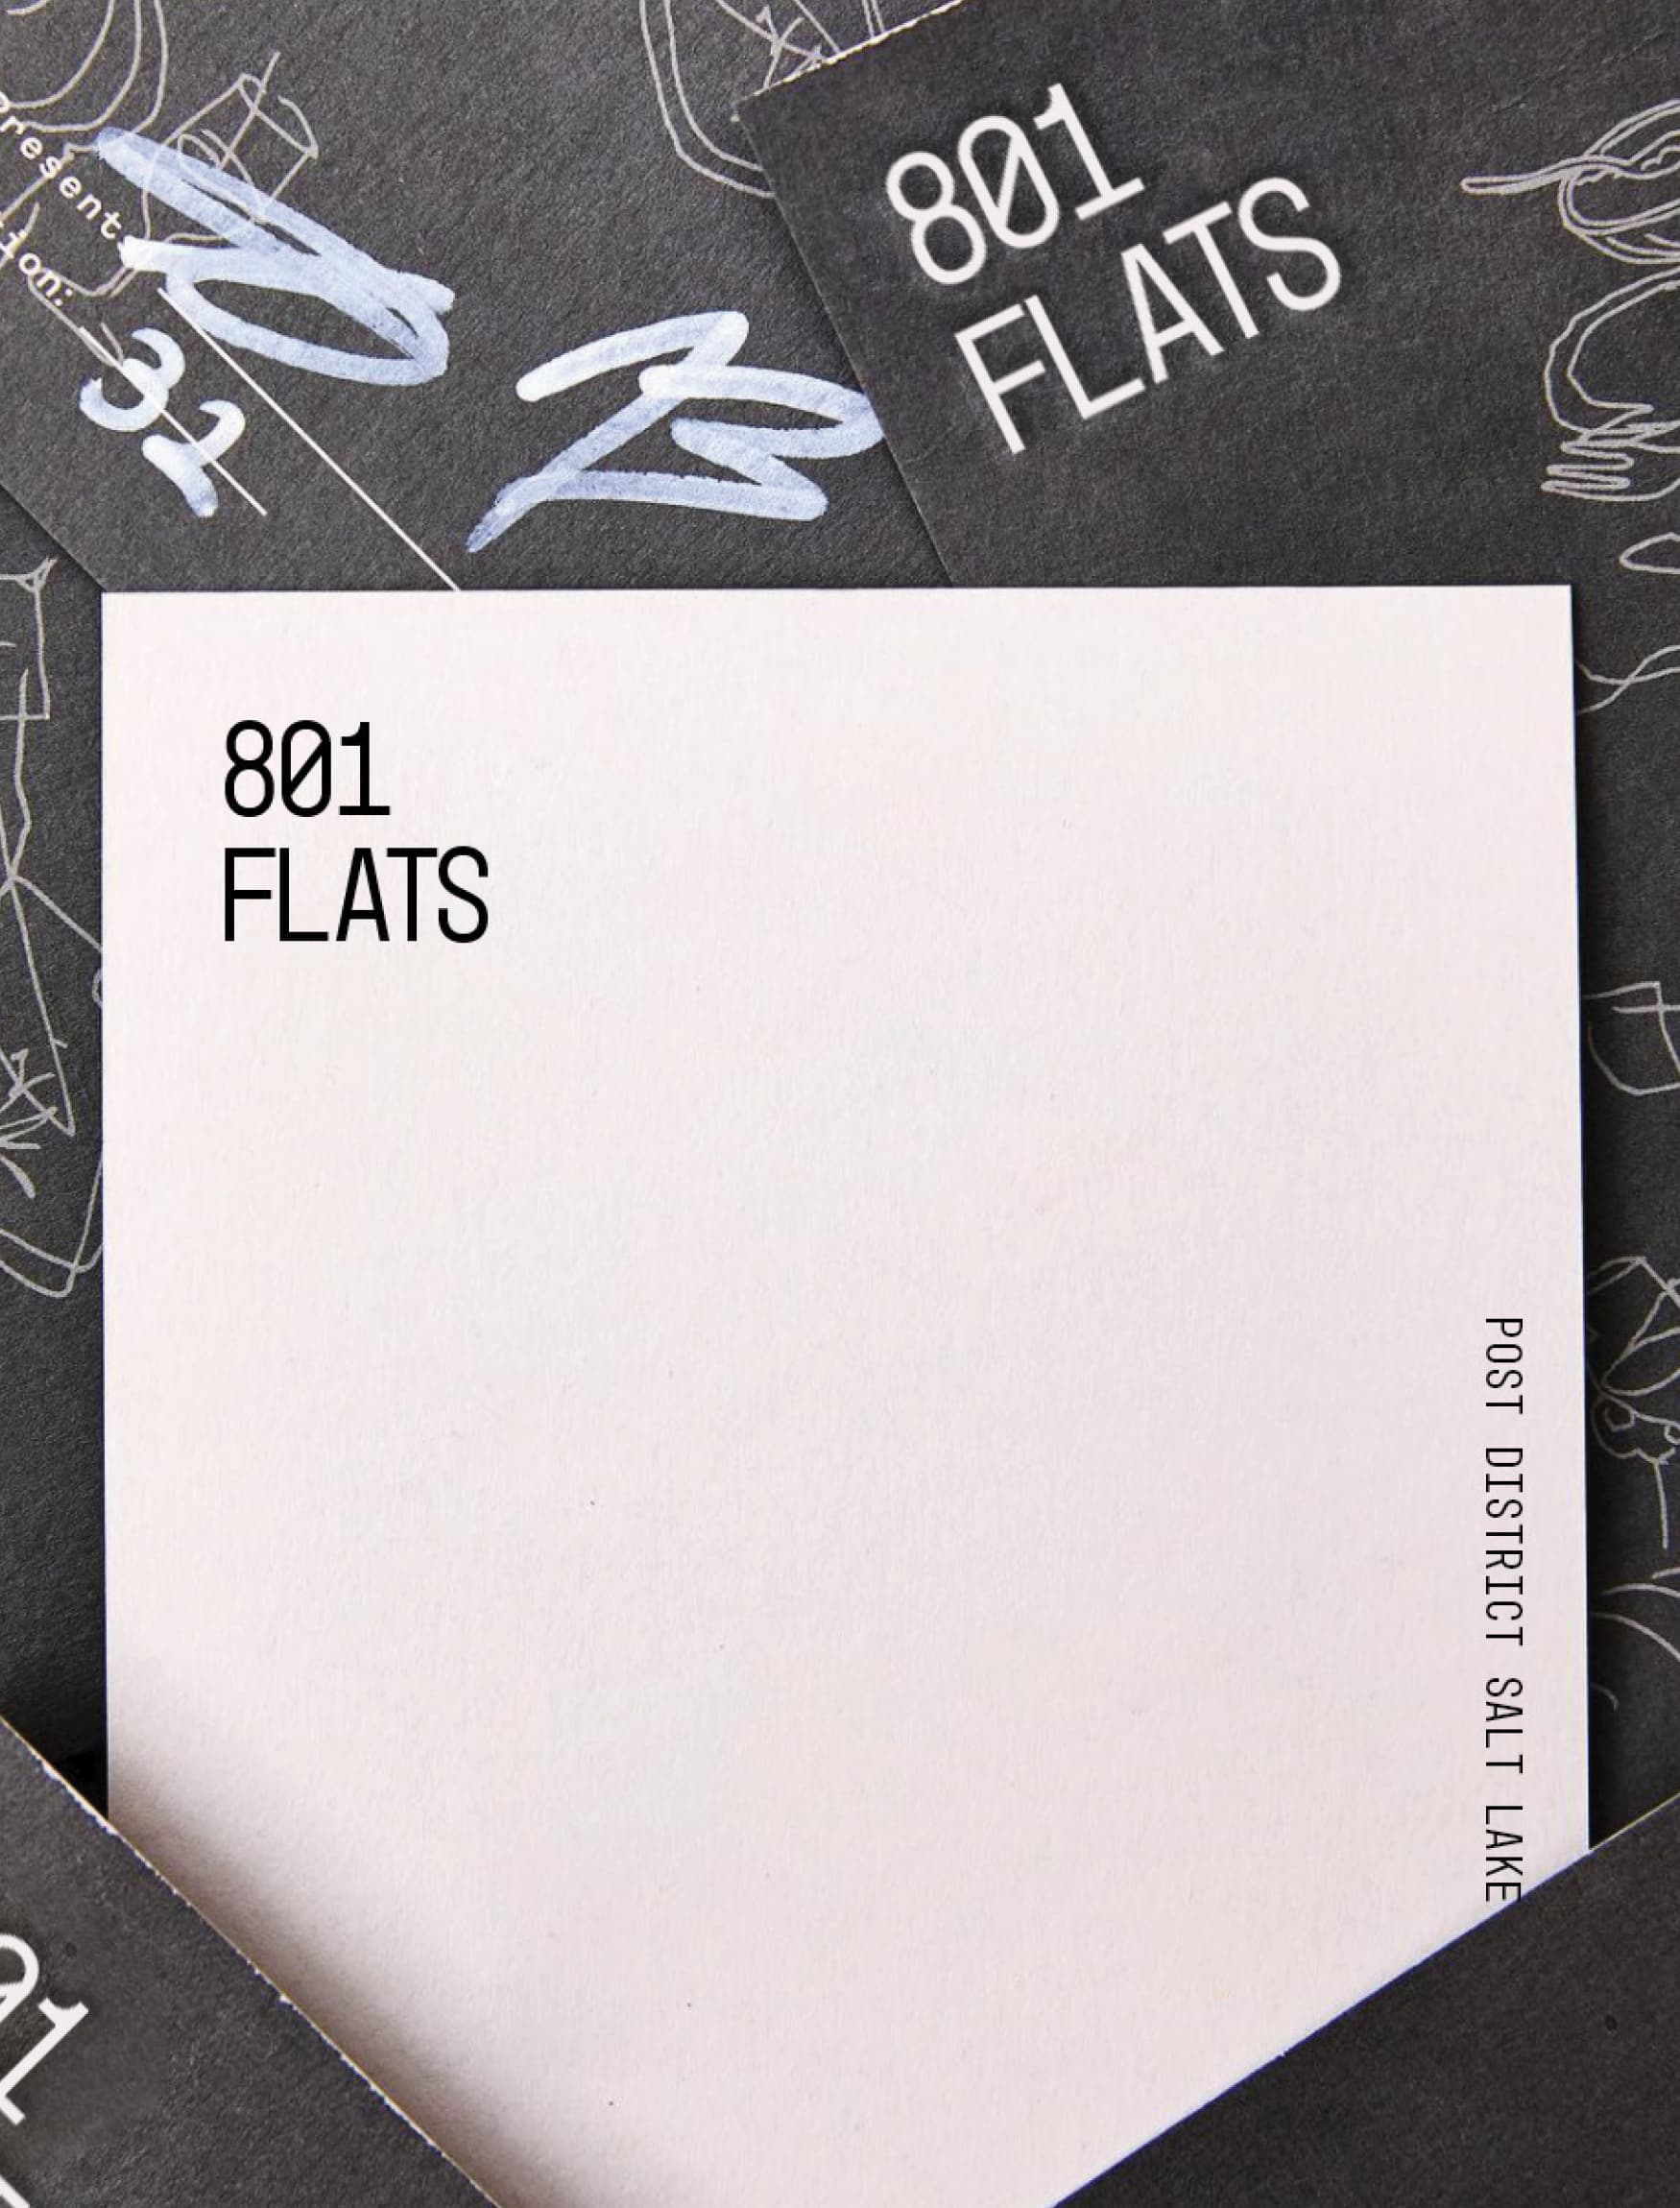 801 Flats brand stationery designed by RSM Design. 